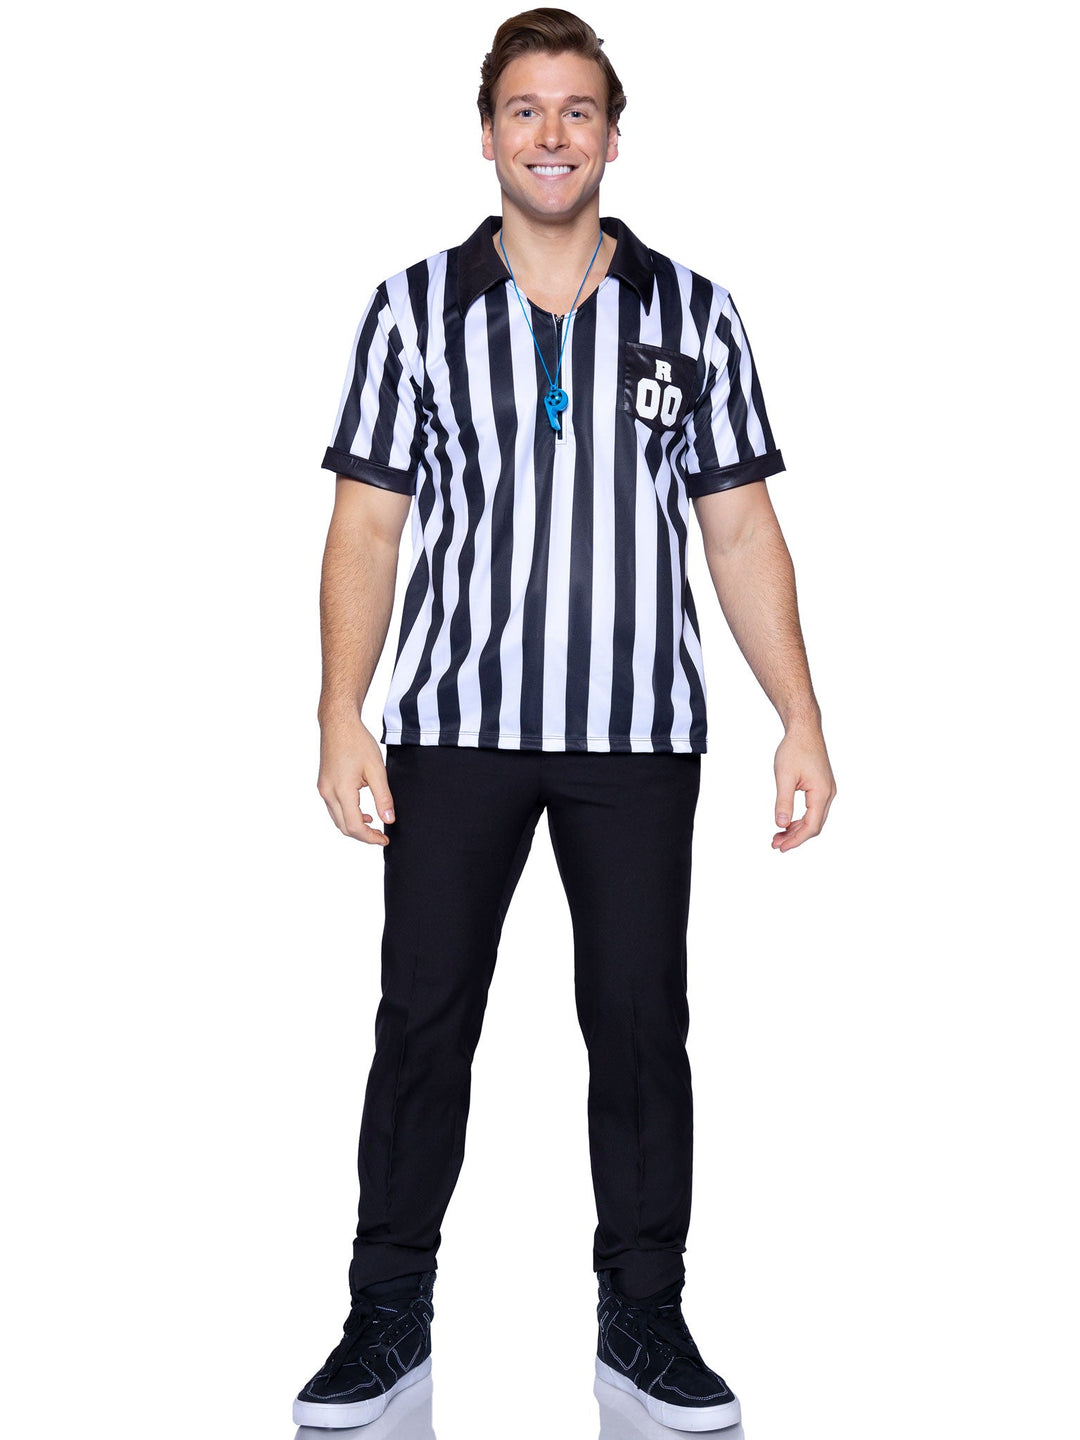 2PC. Men's Referee Shirts